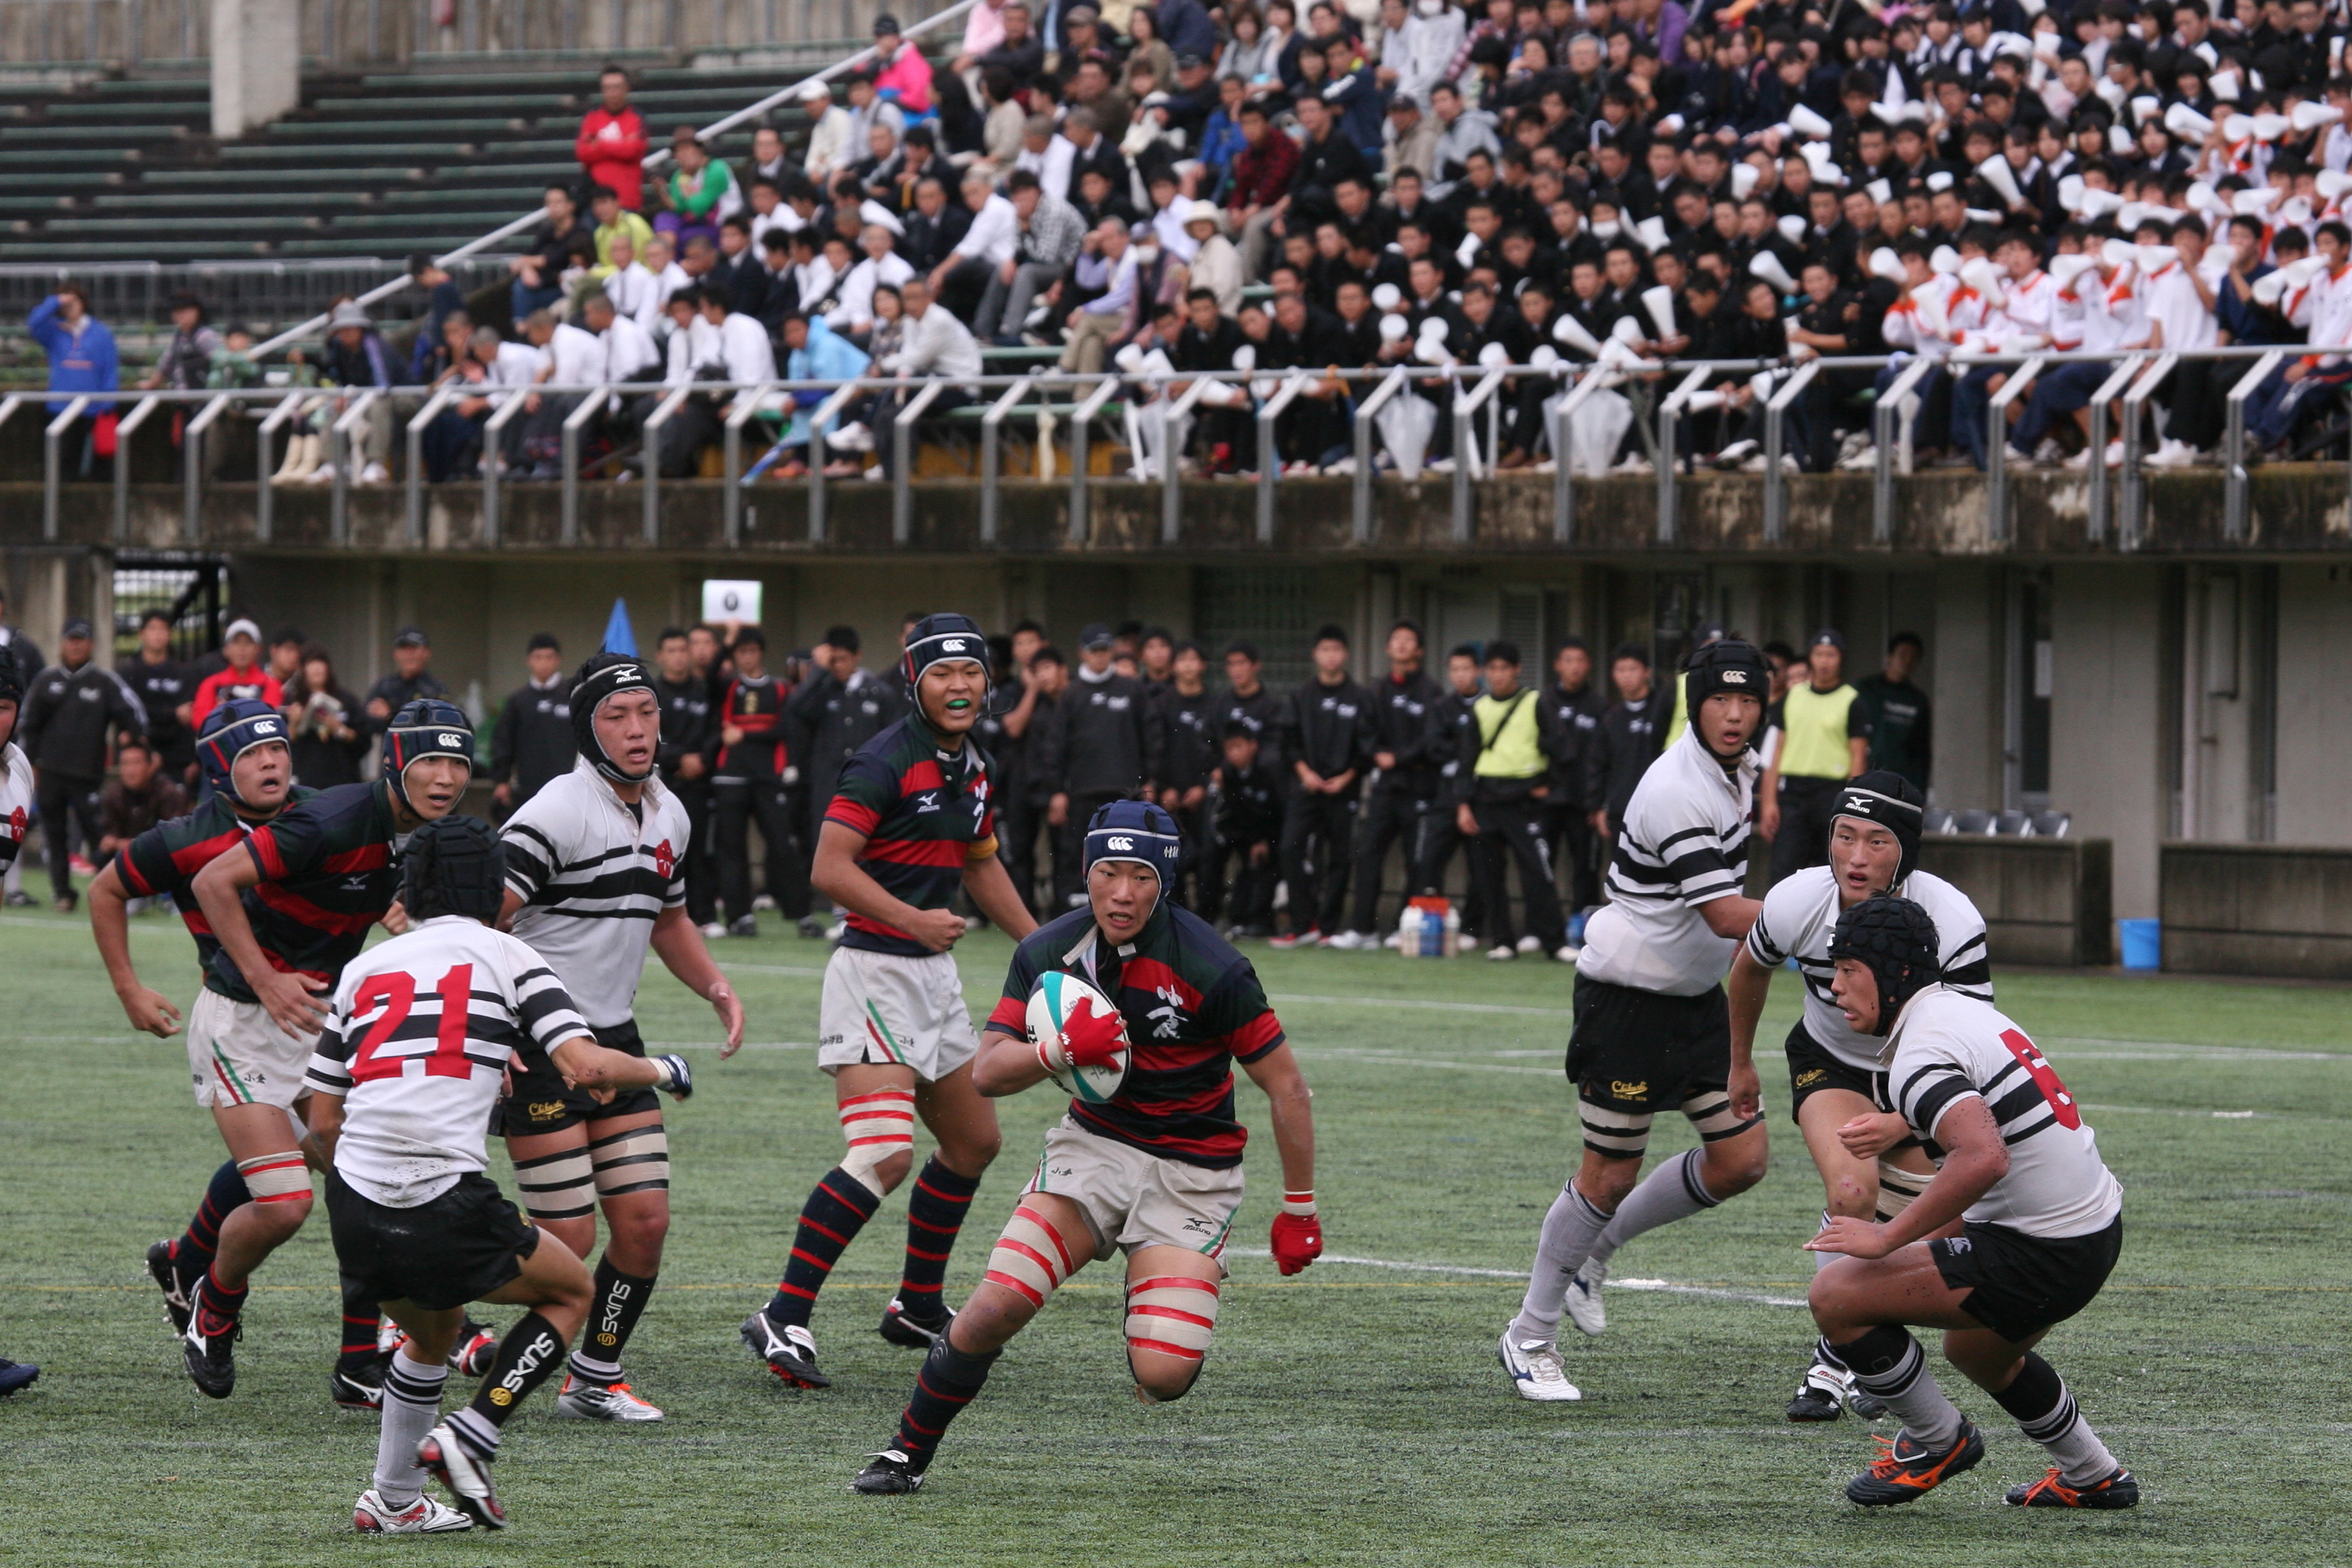 http://kokura-rugby.sakura.ne.jp/2011.11.6-3-36.JPG